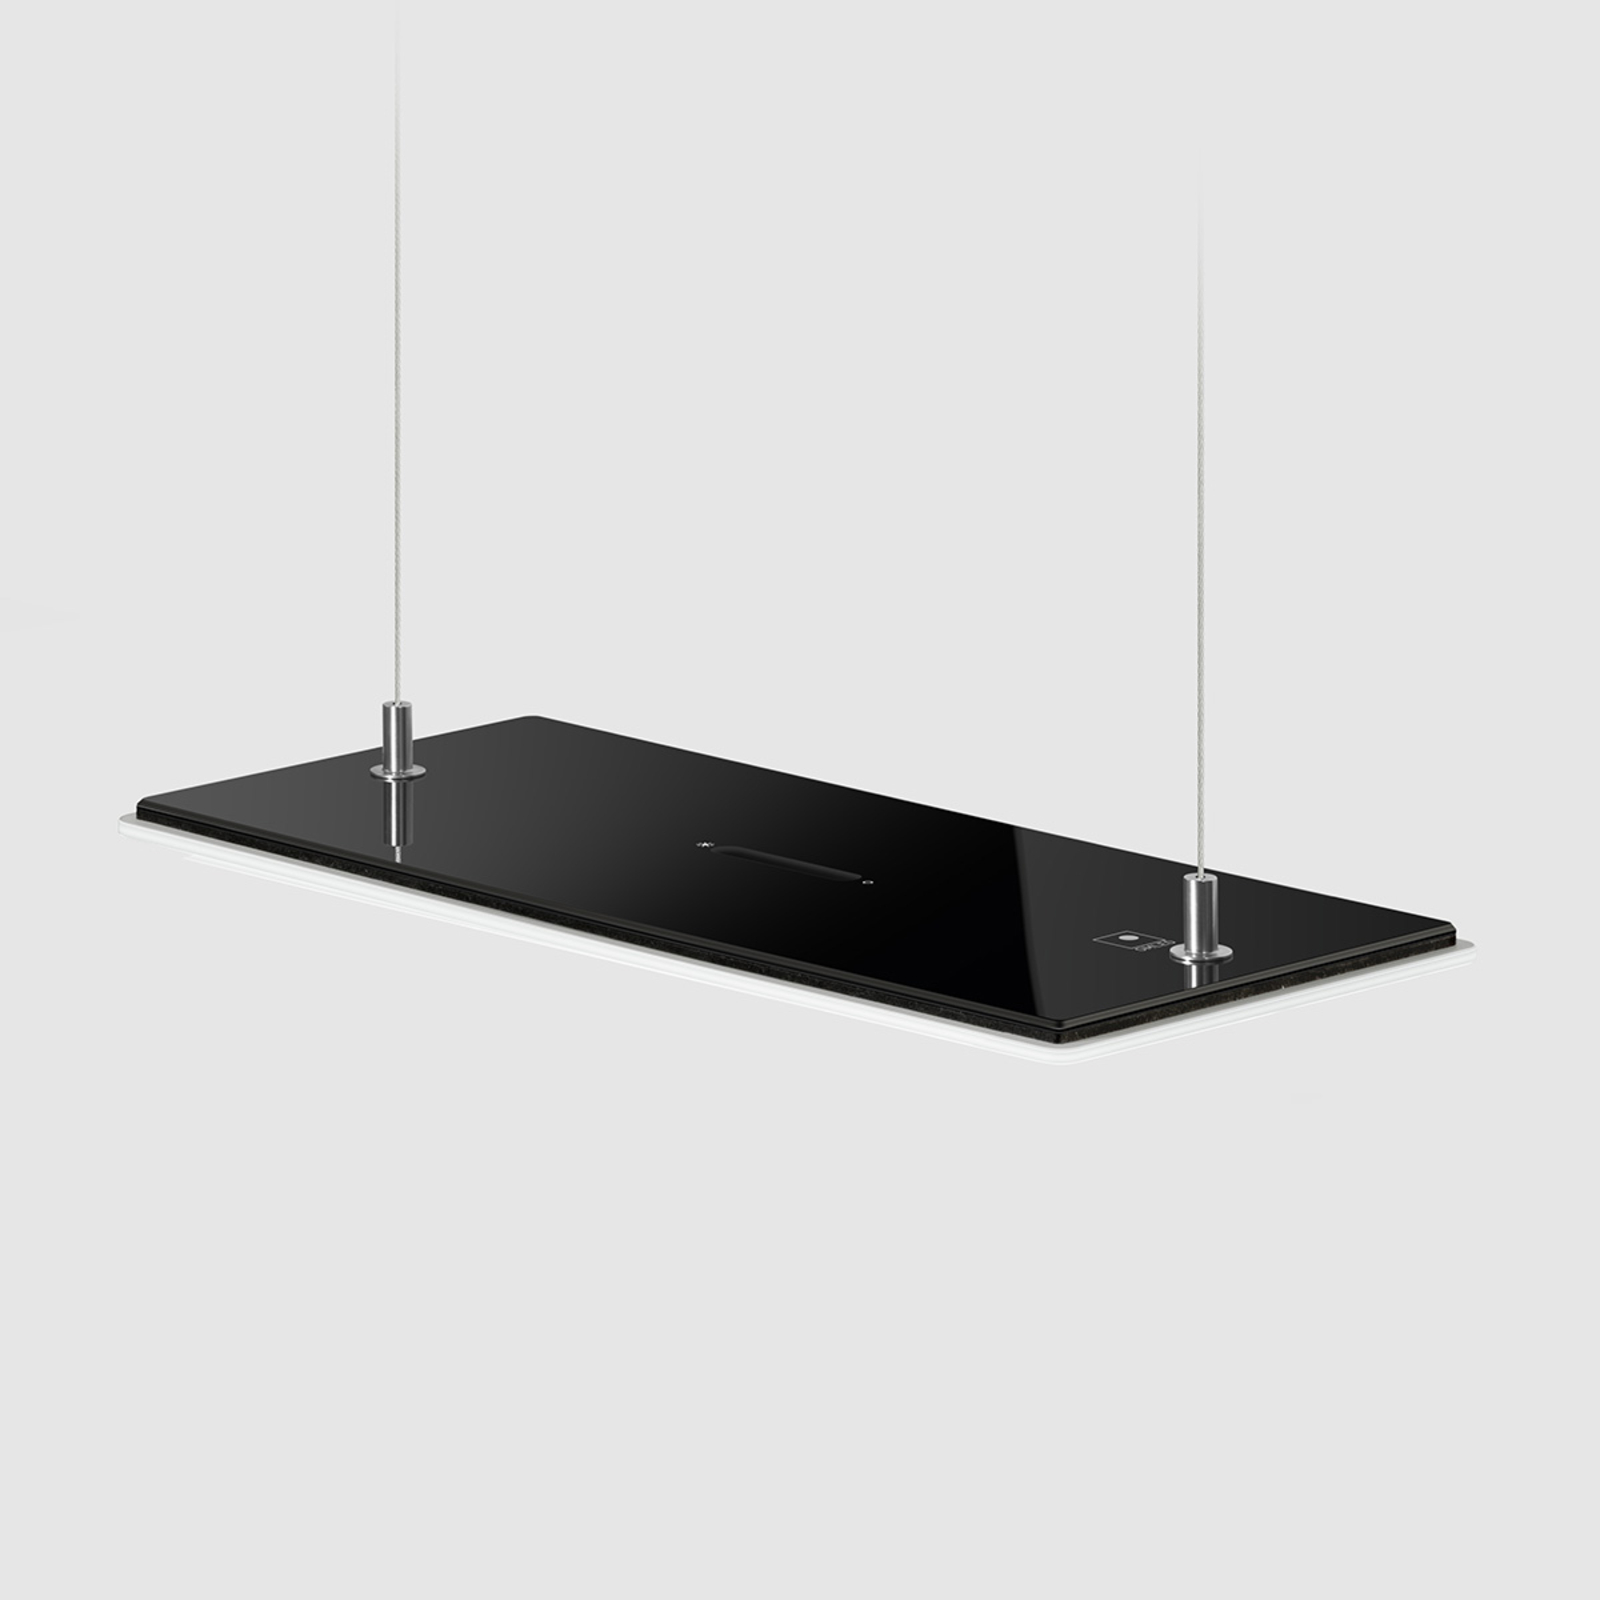 OMLED One s2 - black OLED hanging light